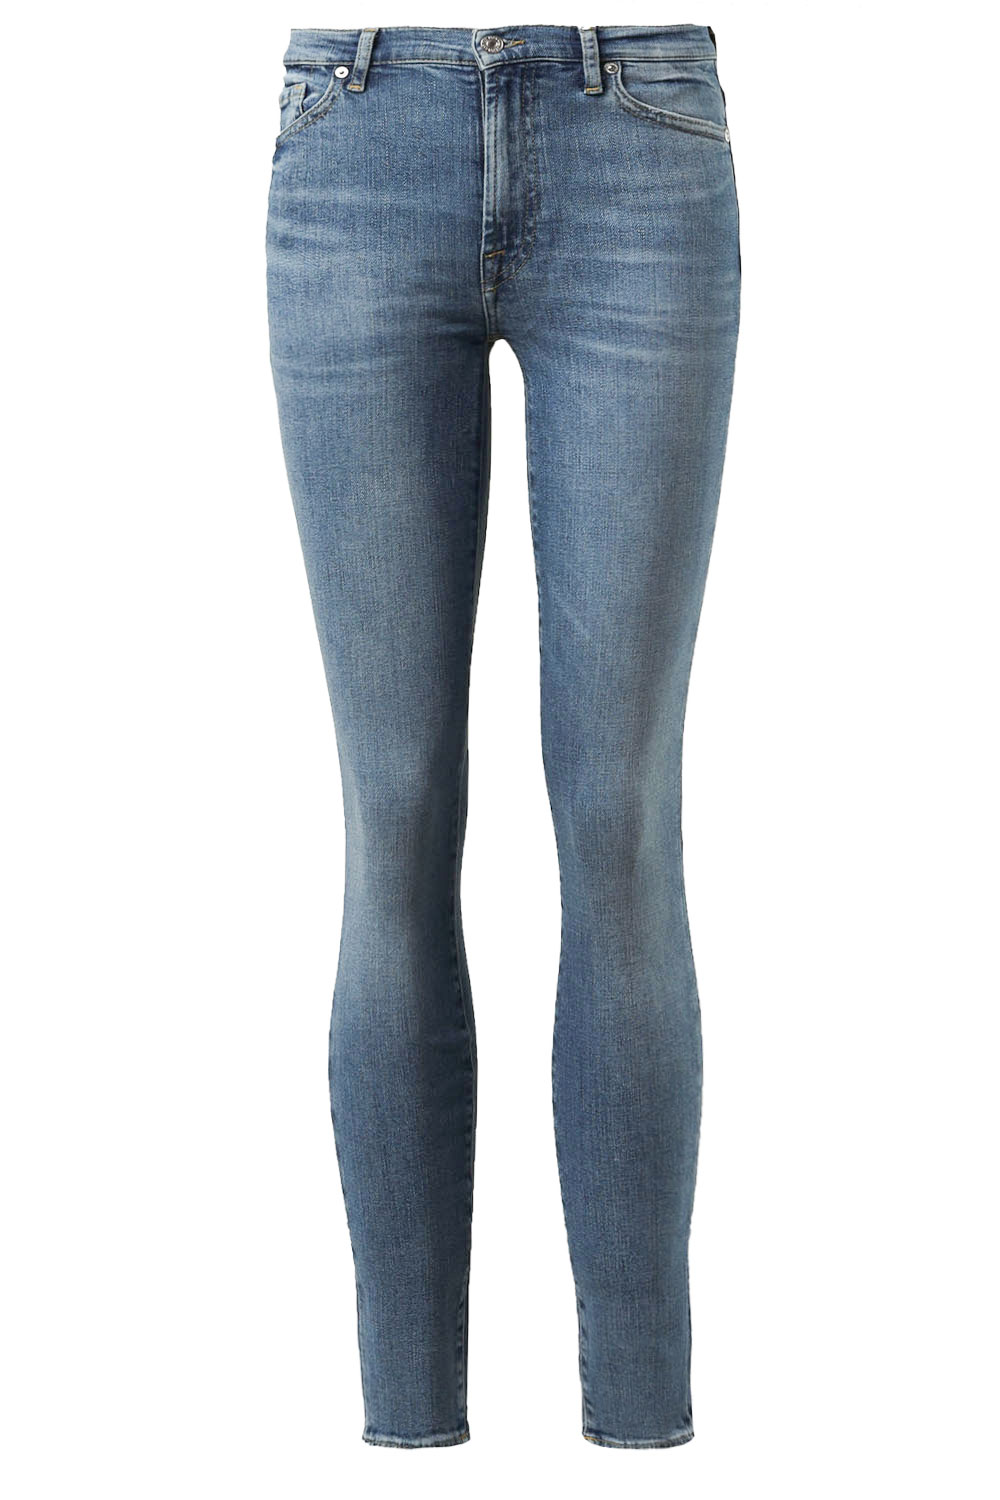 7 For All Mankind Skinny jeans Mira L30 blauw